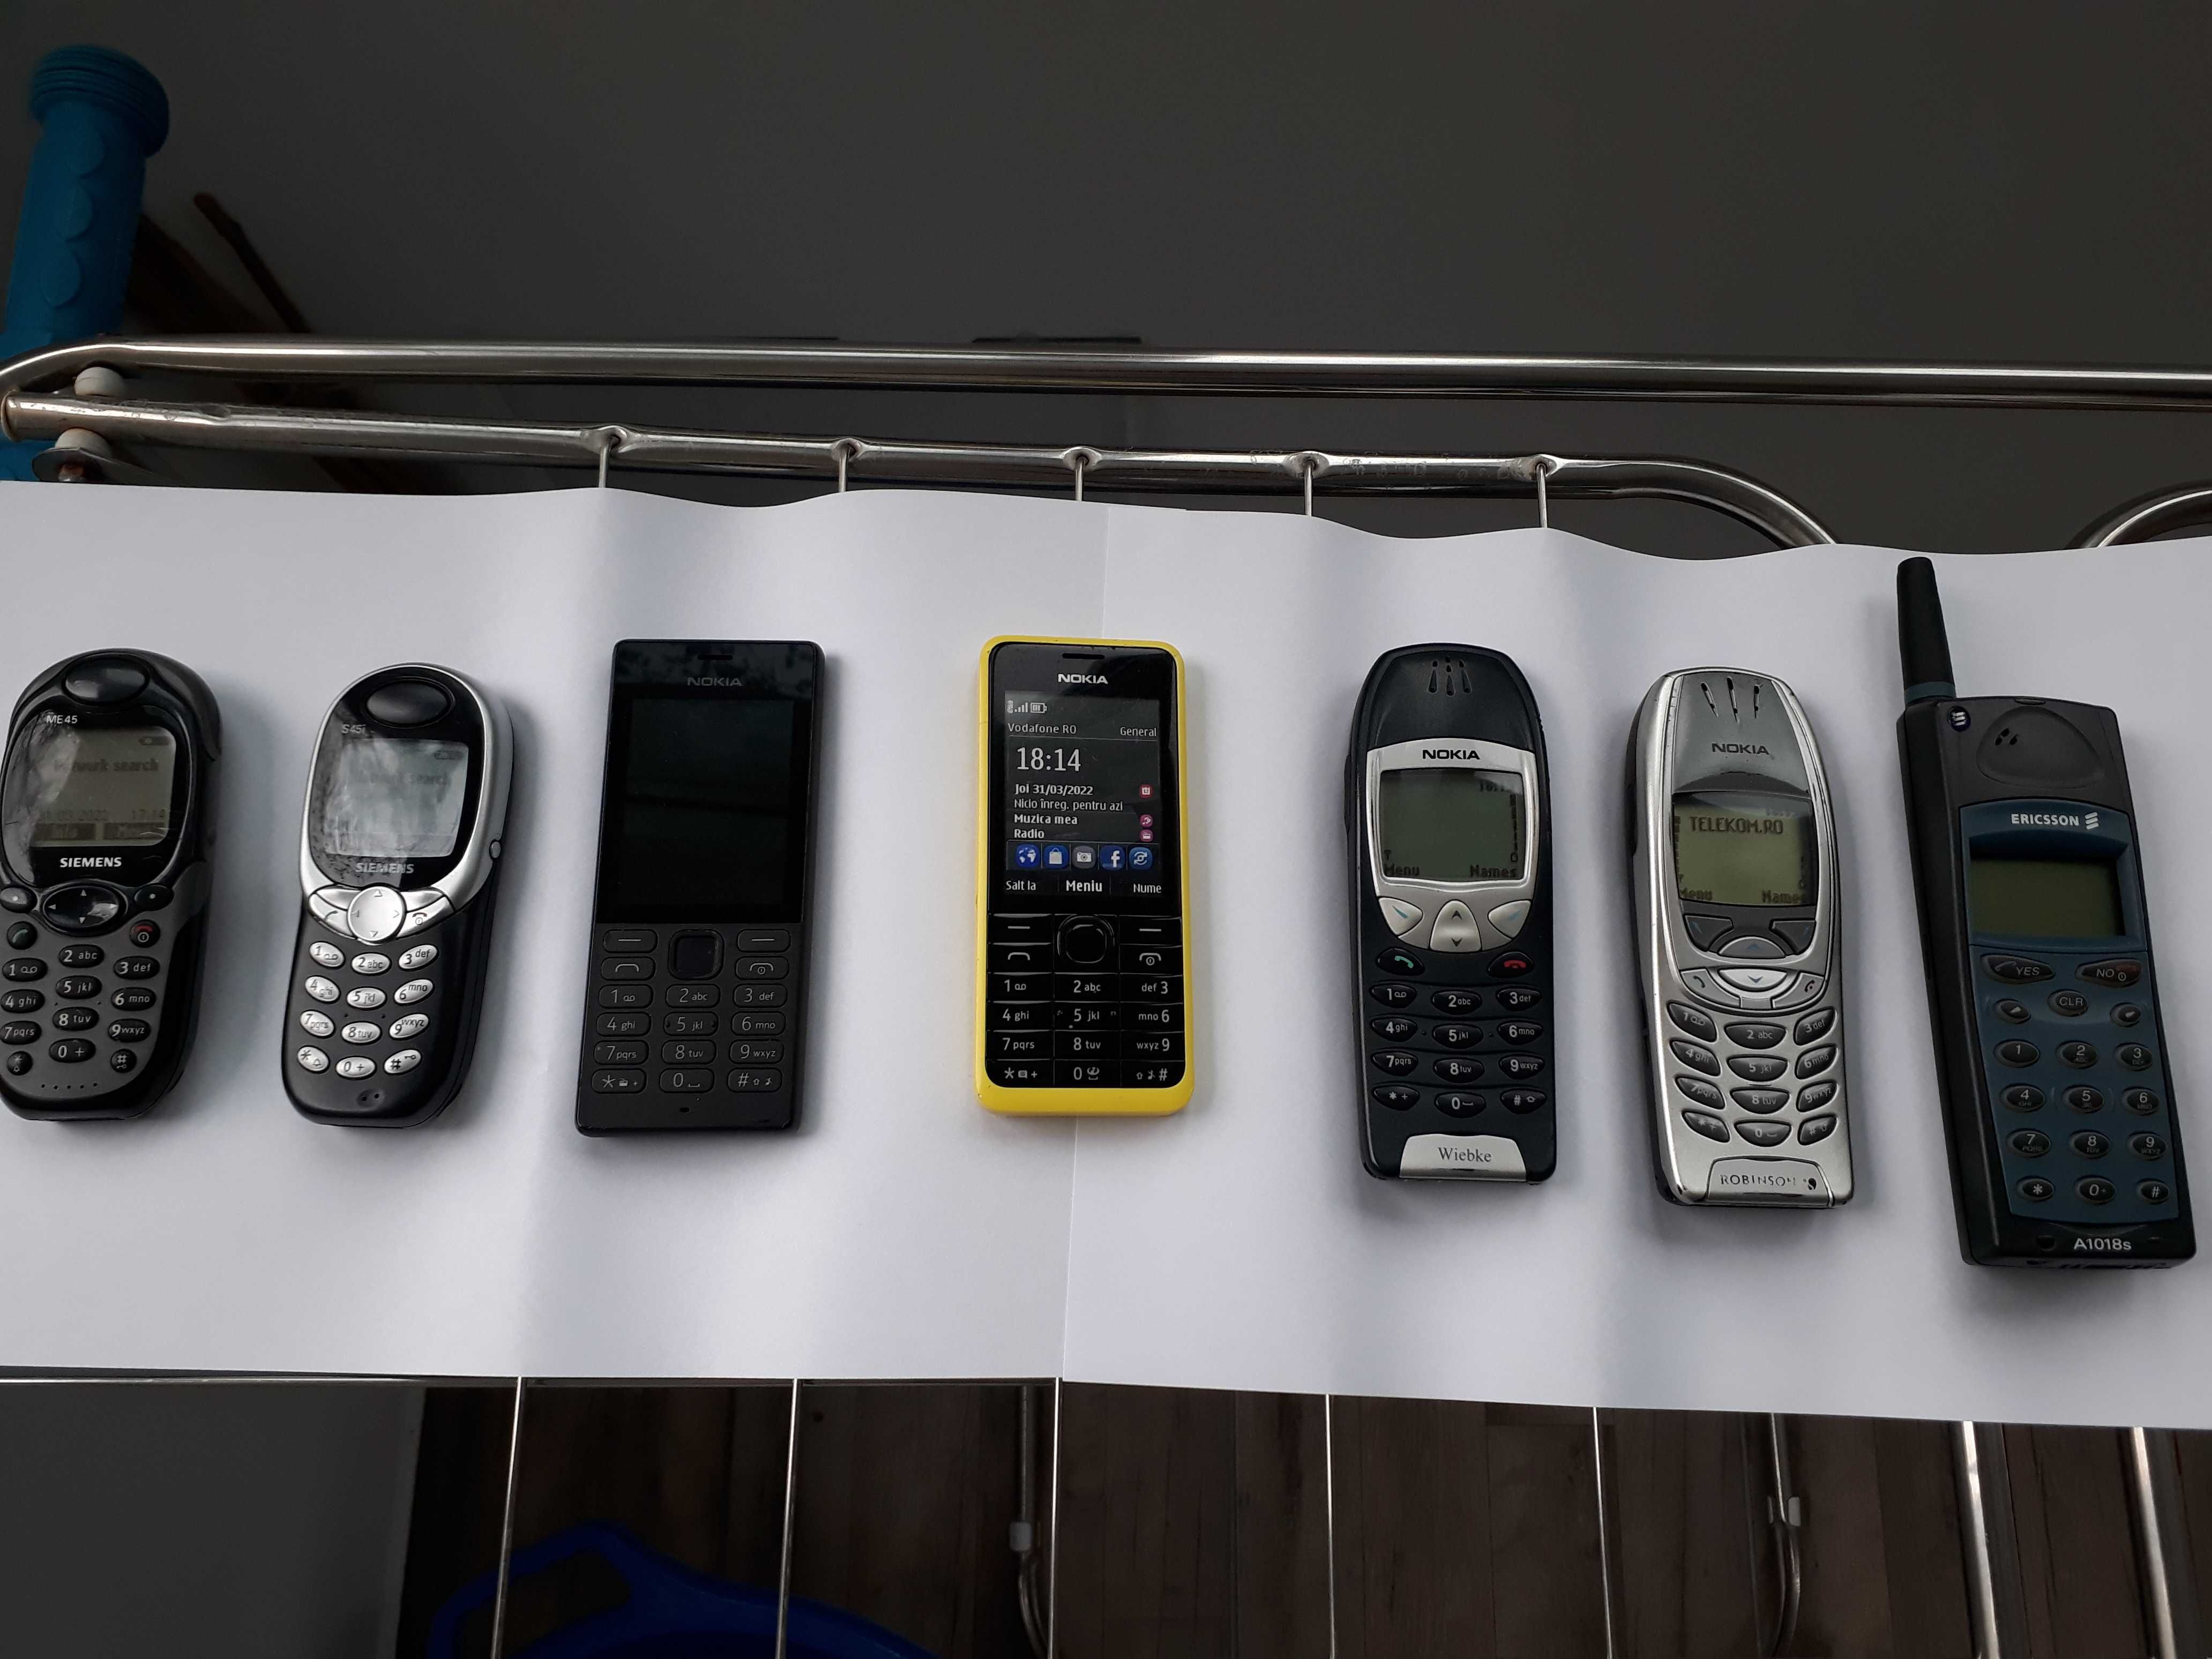 Nokia 150, 301, 6210, 6310i, Siemens ME45, S45i, Ericsson A1018s